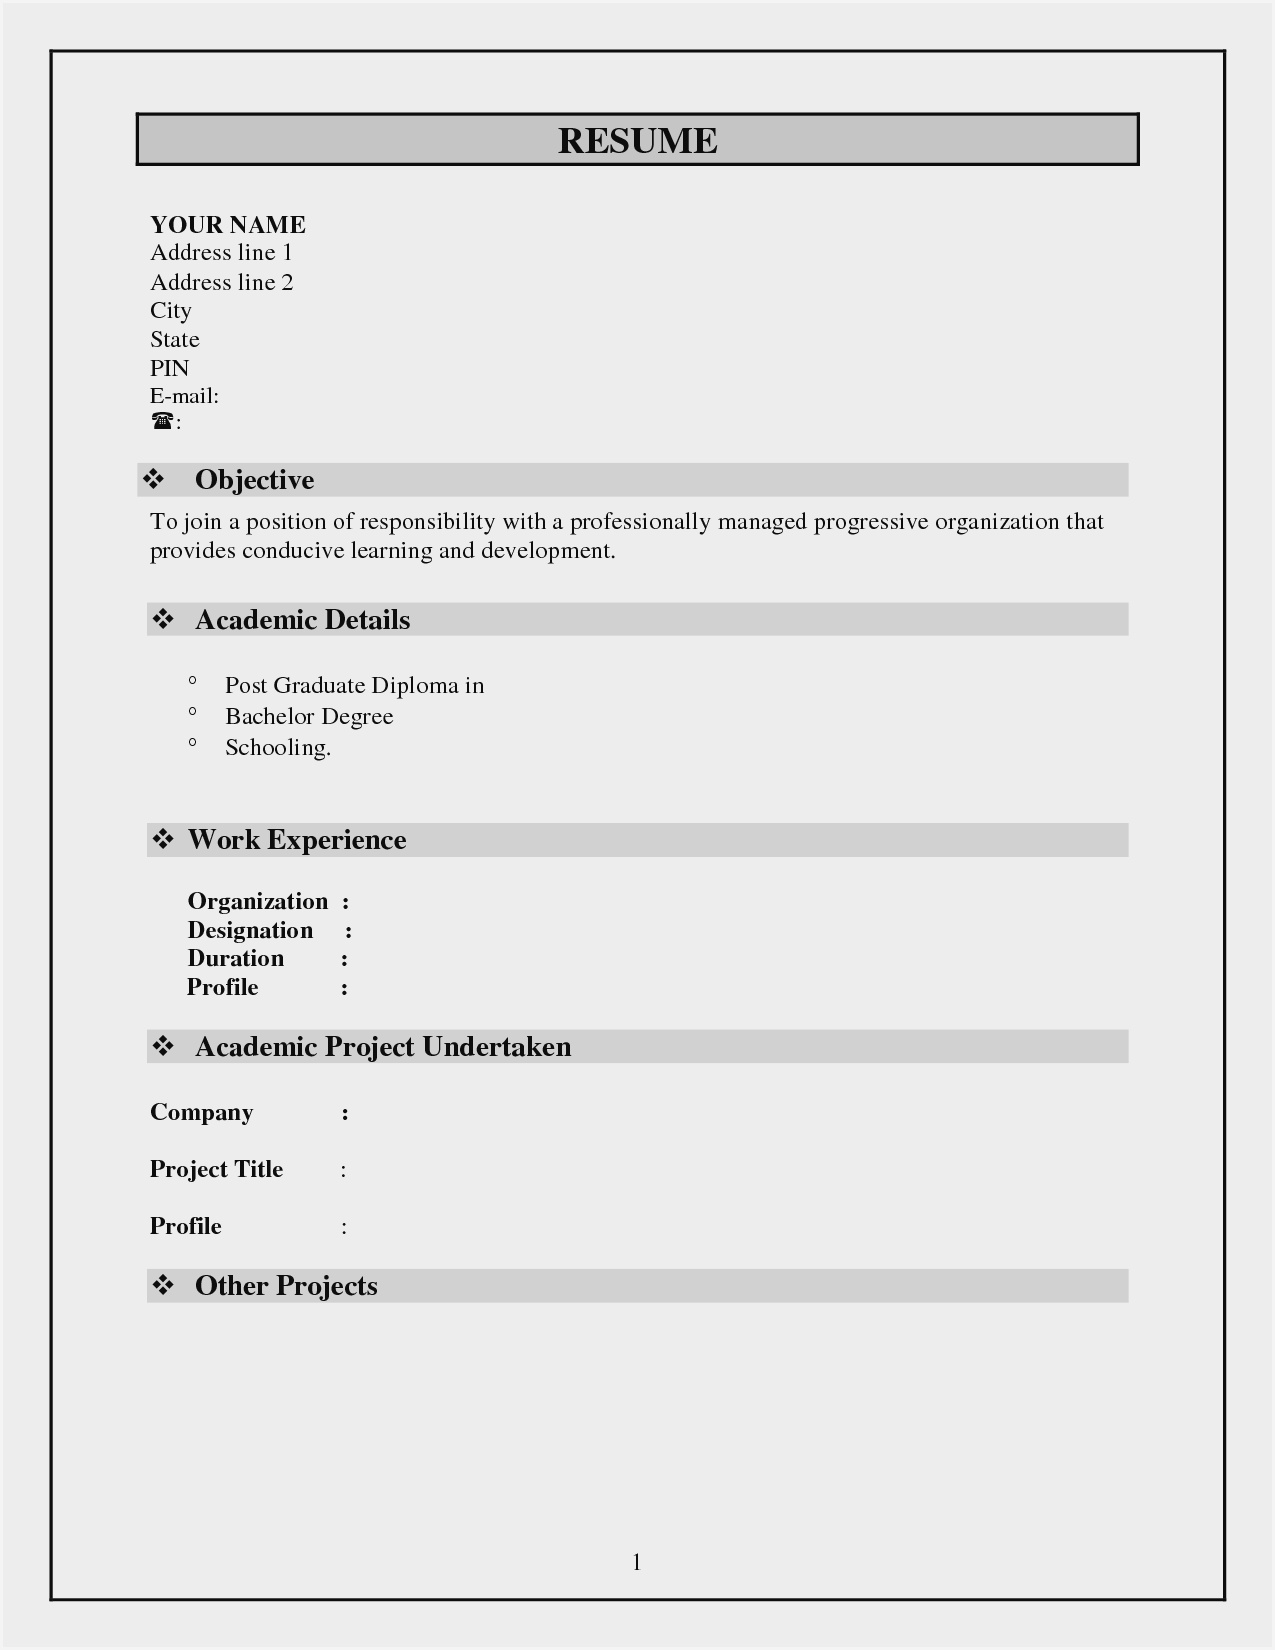 Resume Template Word Download Malaysia – Resume Sample Regarding Job Application Template Word Document